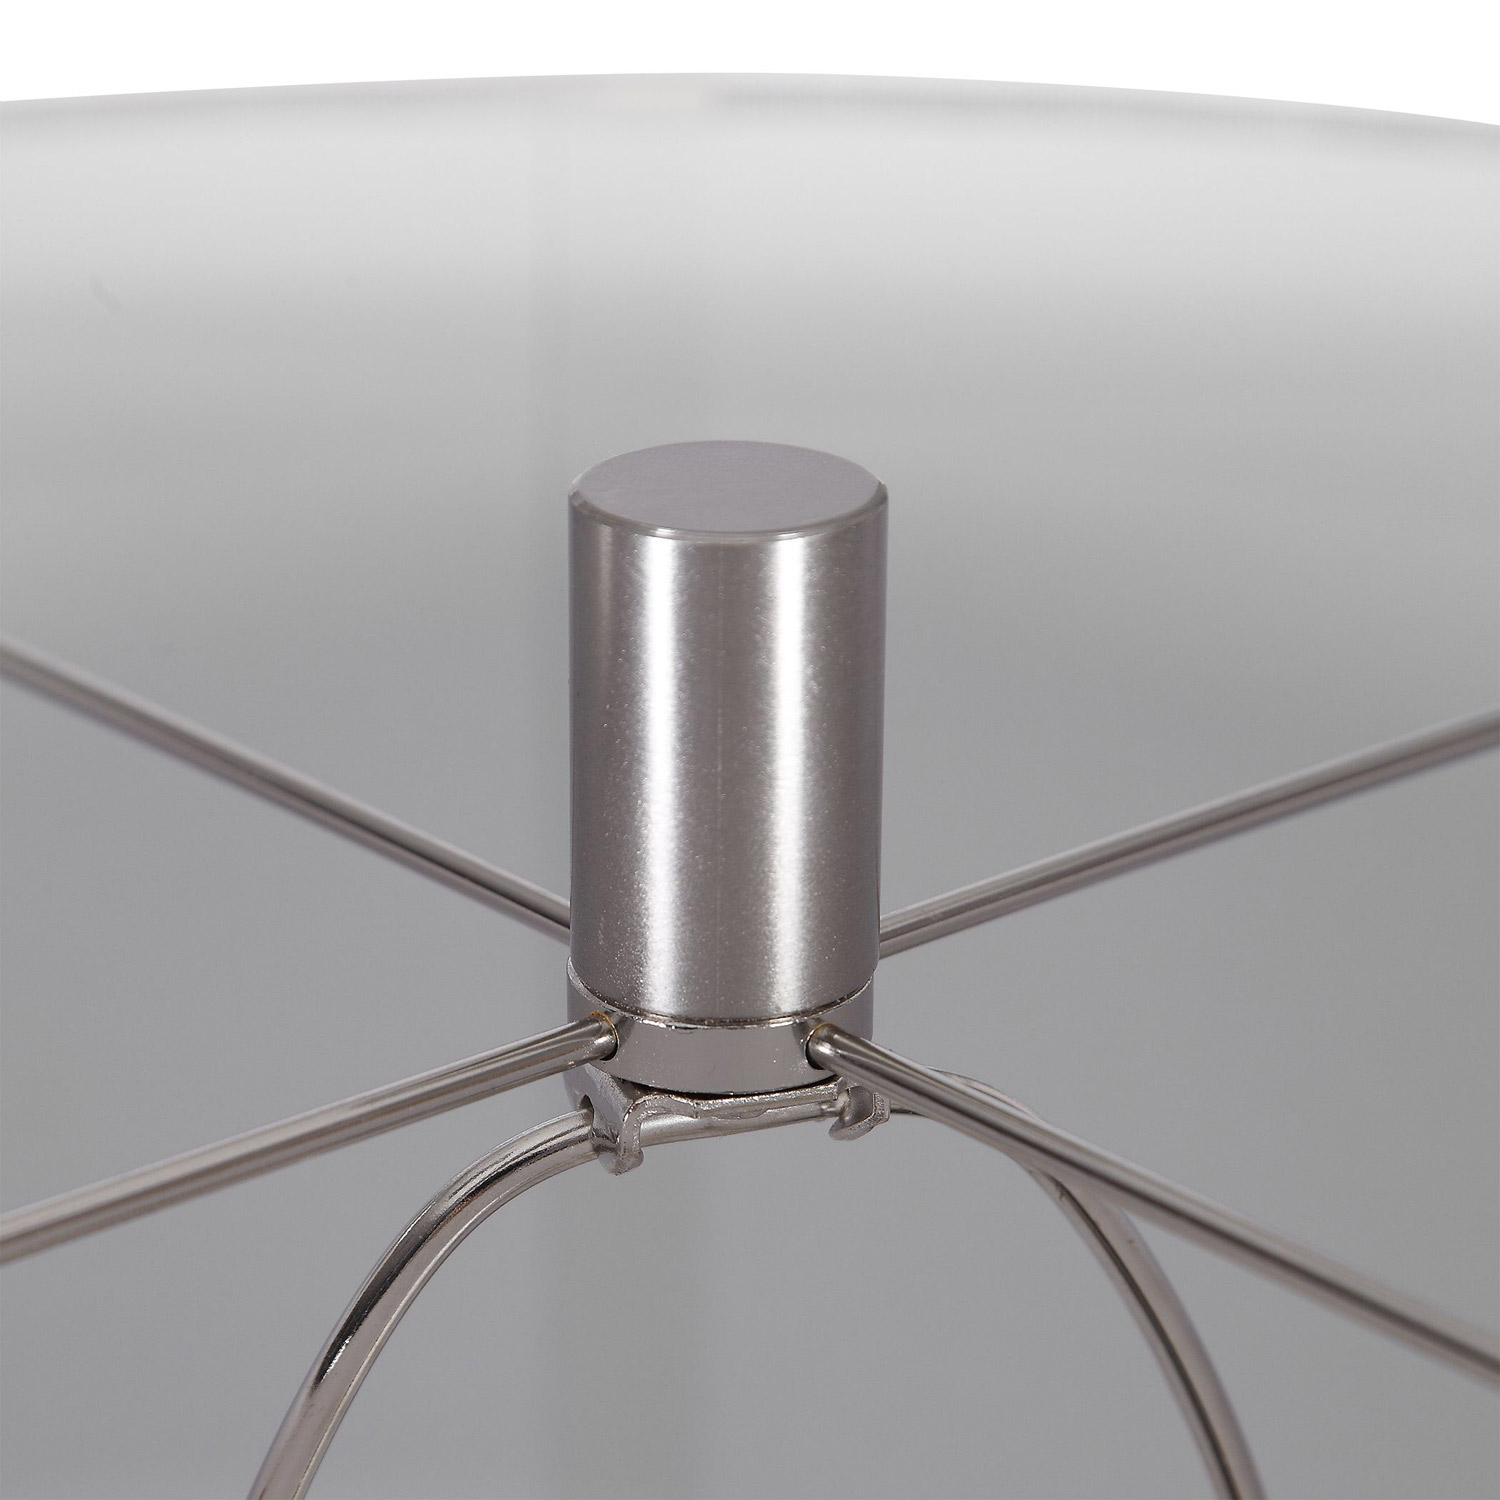 Uttermost Akello Table Lamp - Weave Texture